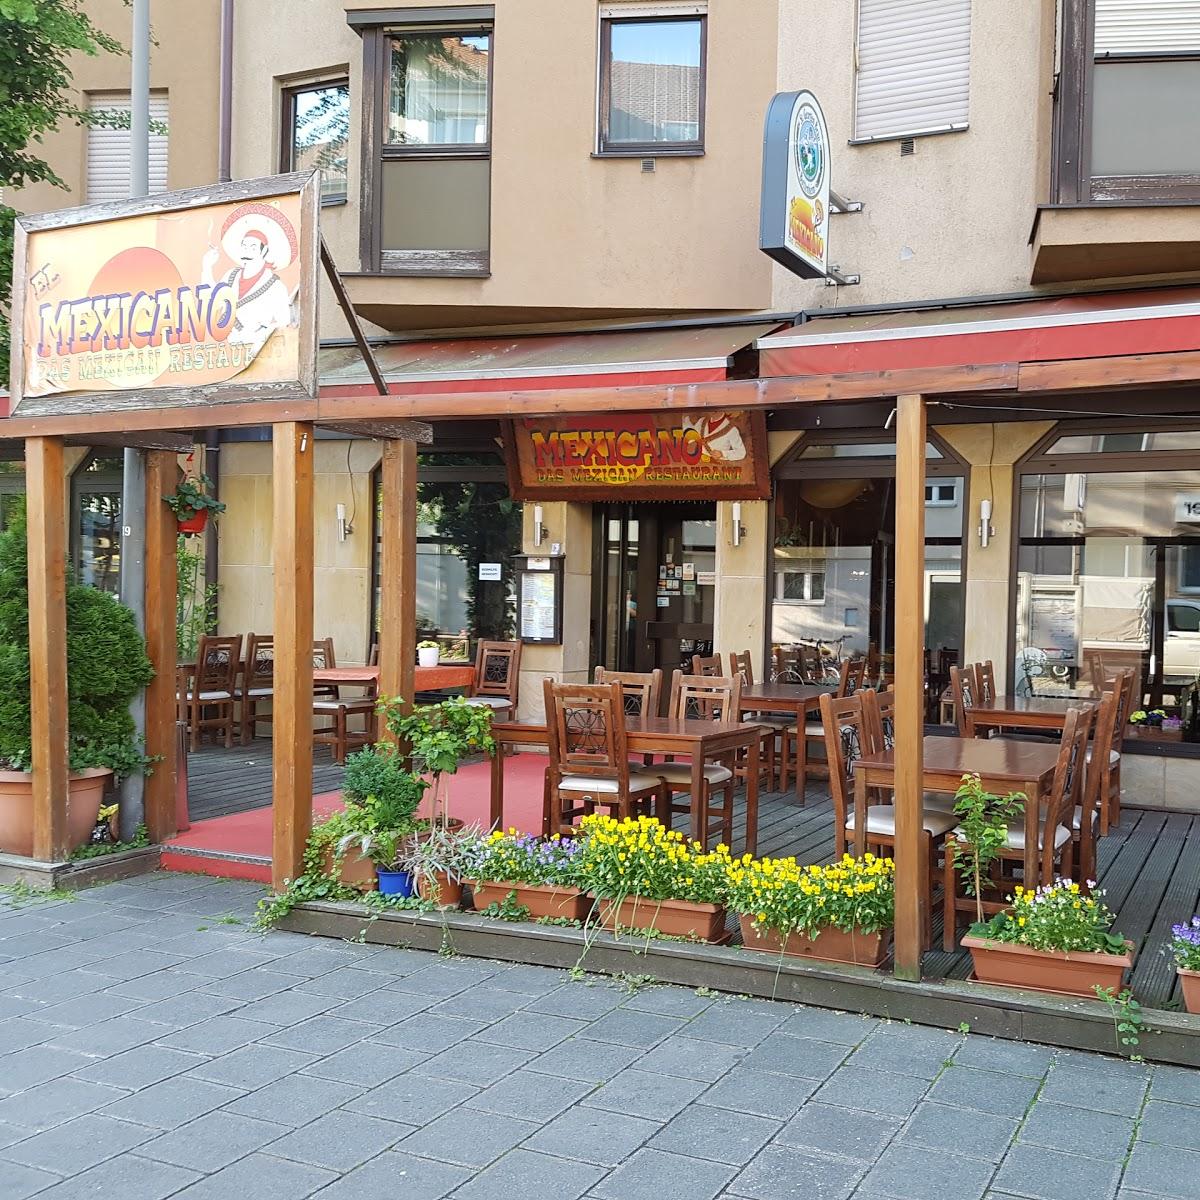 Restaurant "El - Mexicano" in Nürnberg